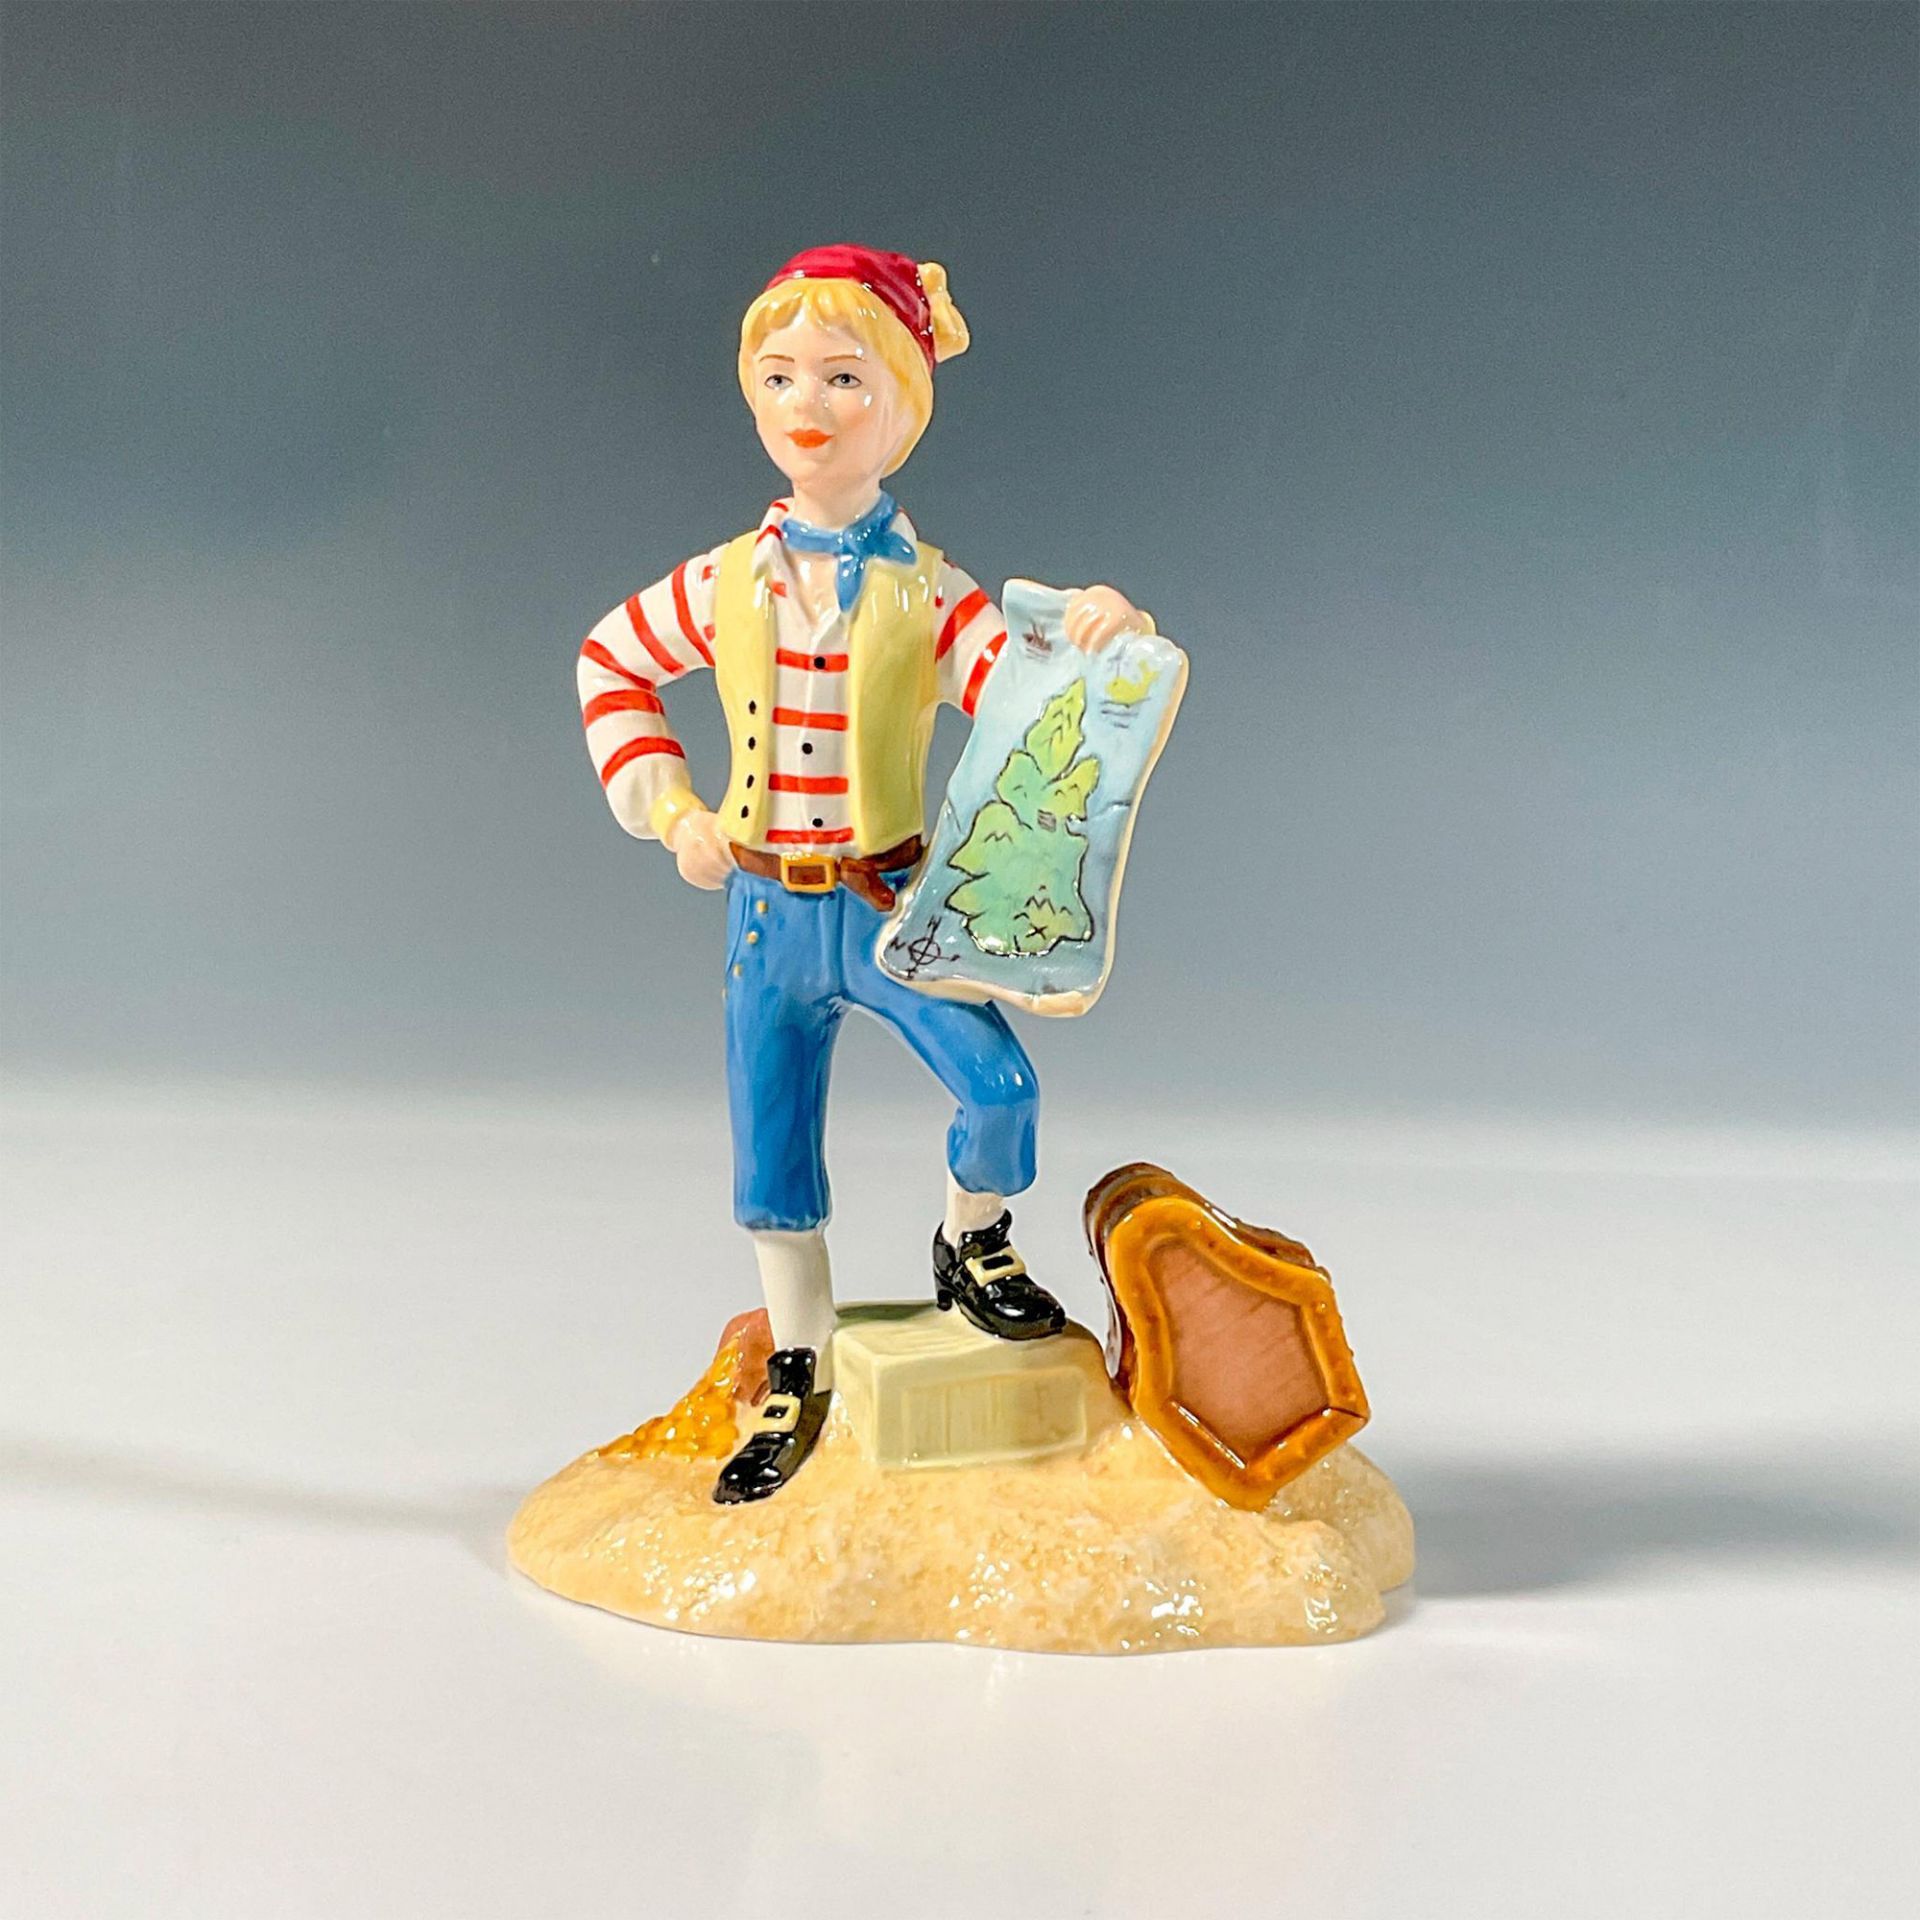 Jim Hawkins - Rare Royal Doulton Prototype Figurine